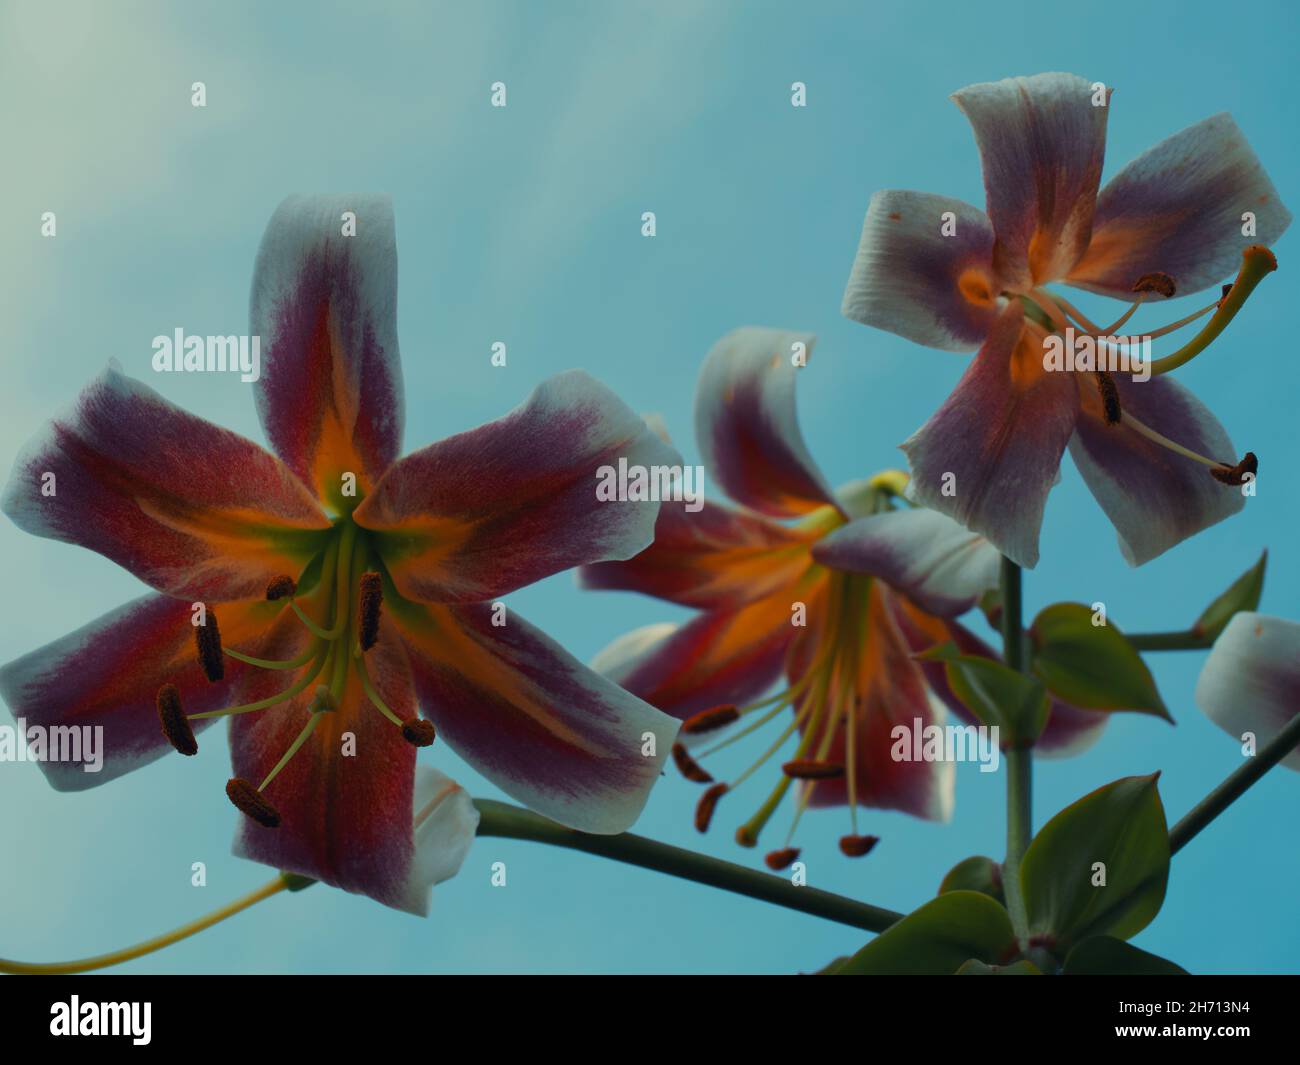 Lirium fotografías e imágenes de alta resolución - Alamy